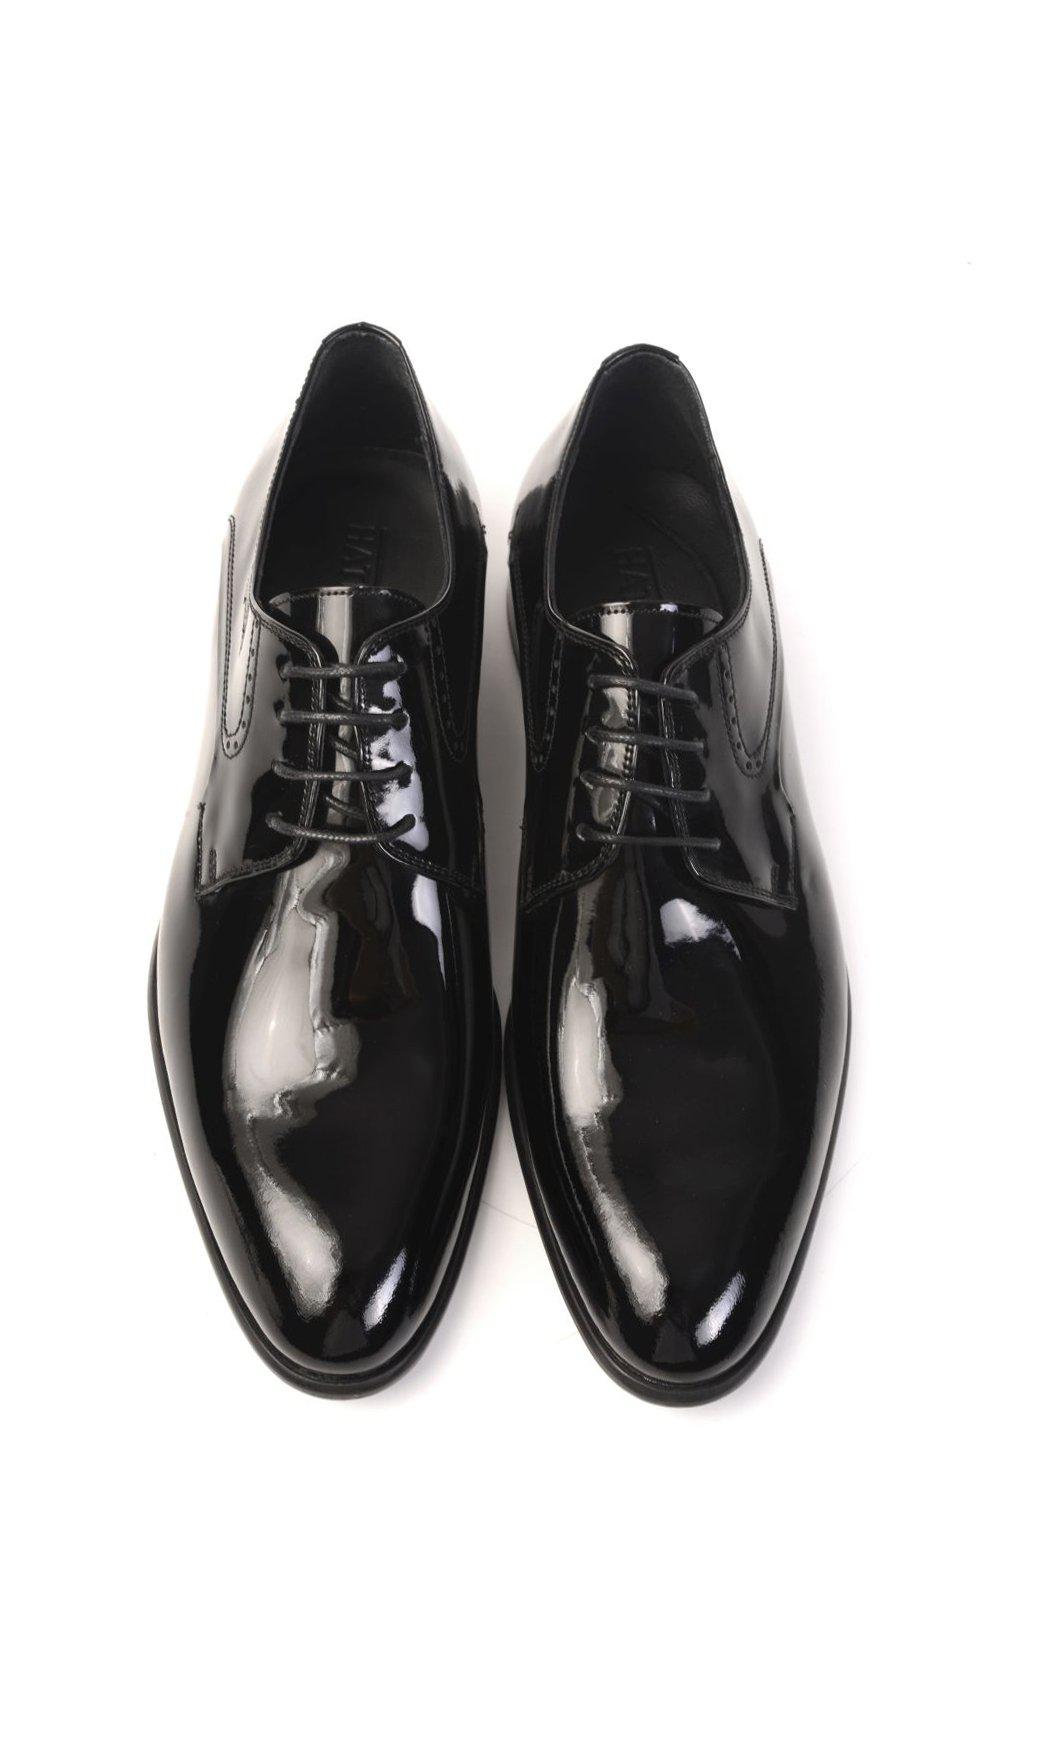 shiny black oxford shoes